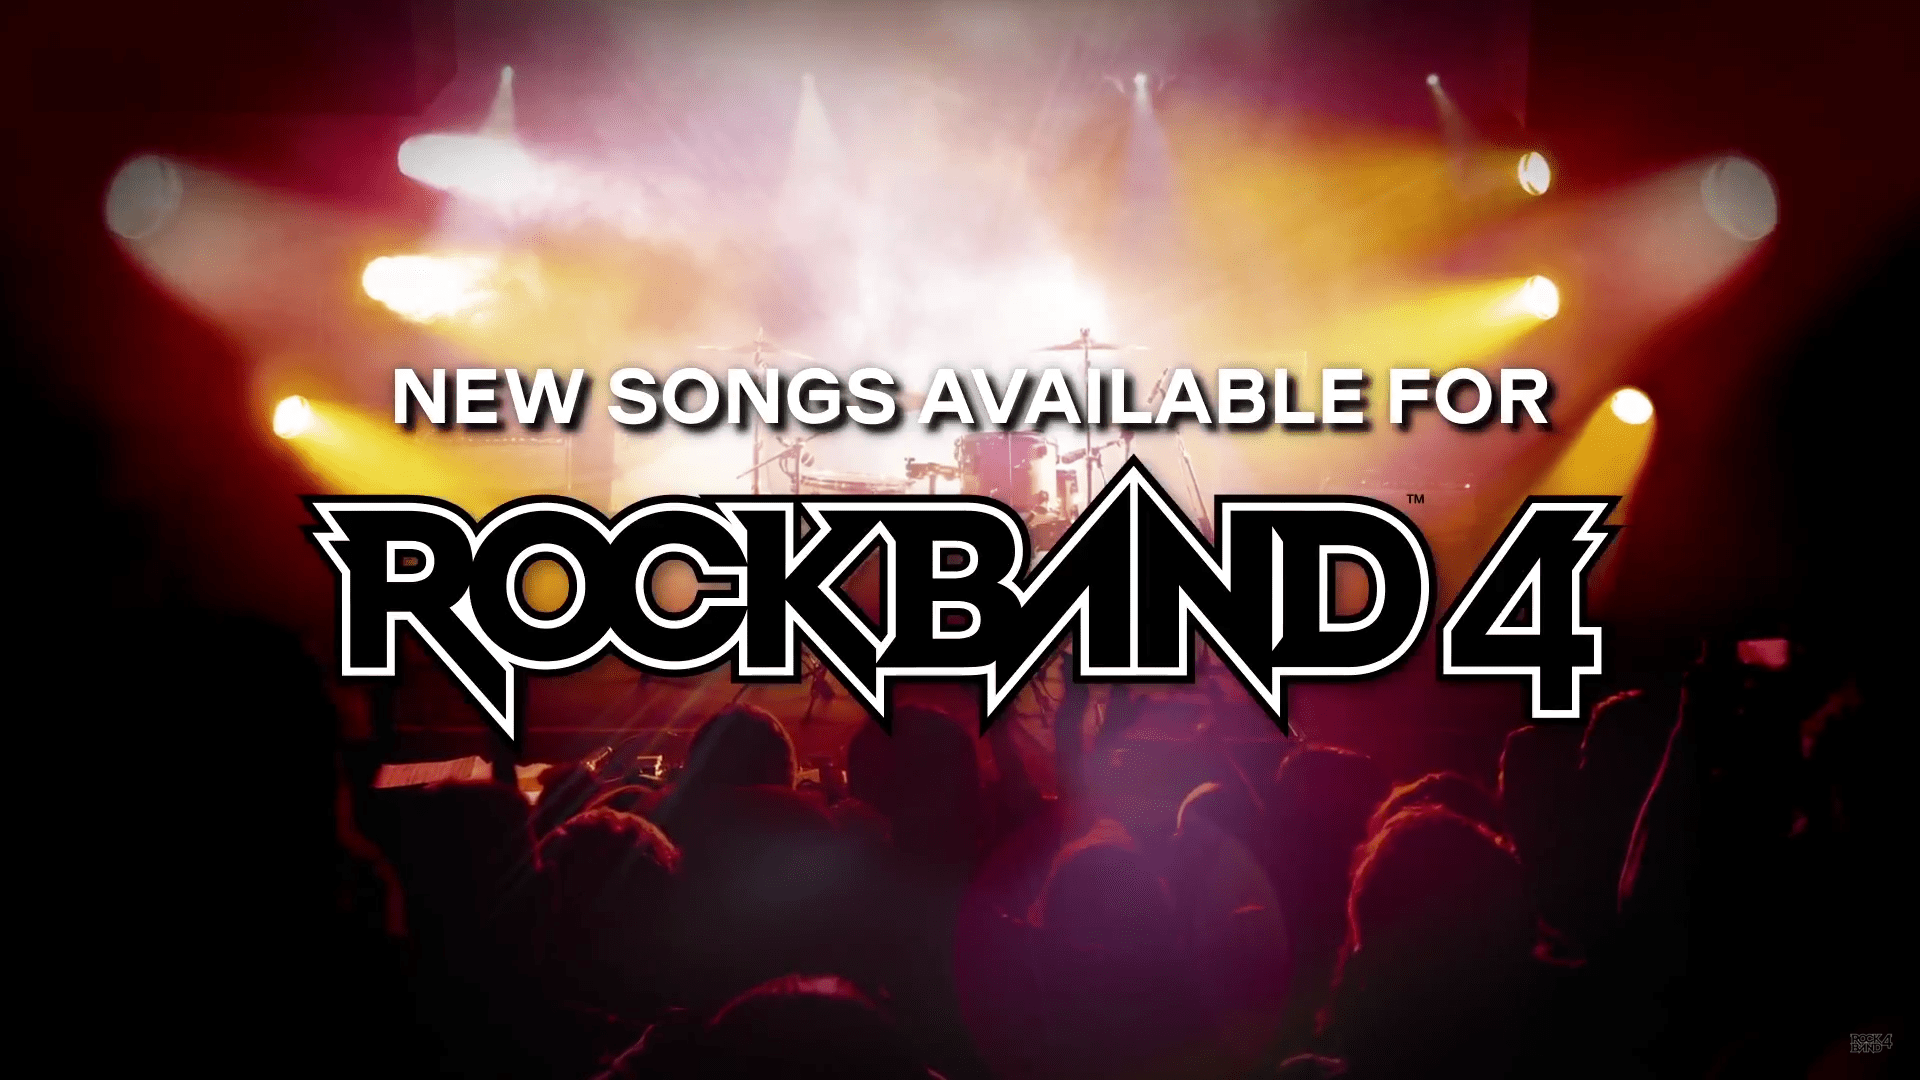 11/24/2015 Rock Band 4 DLC Announced